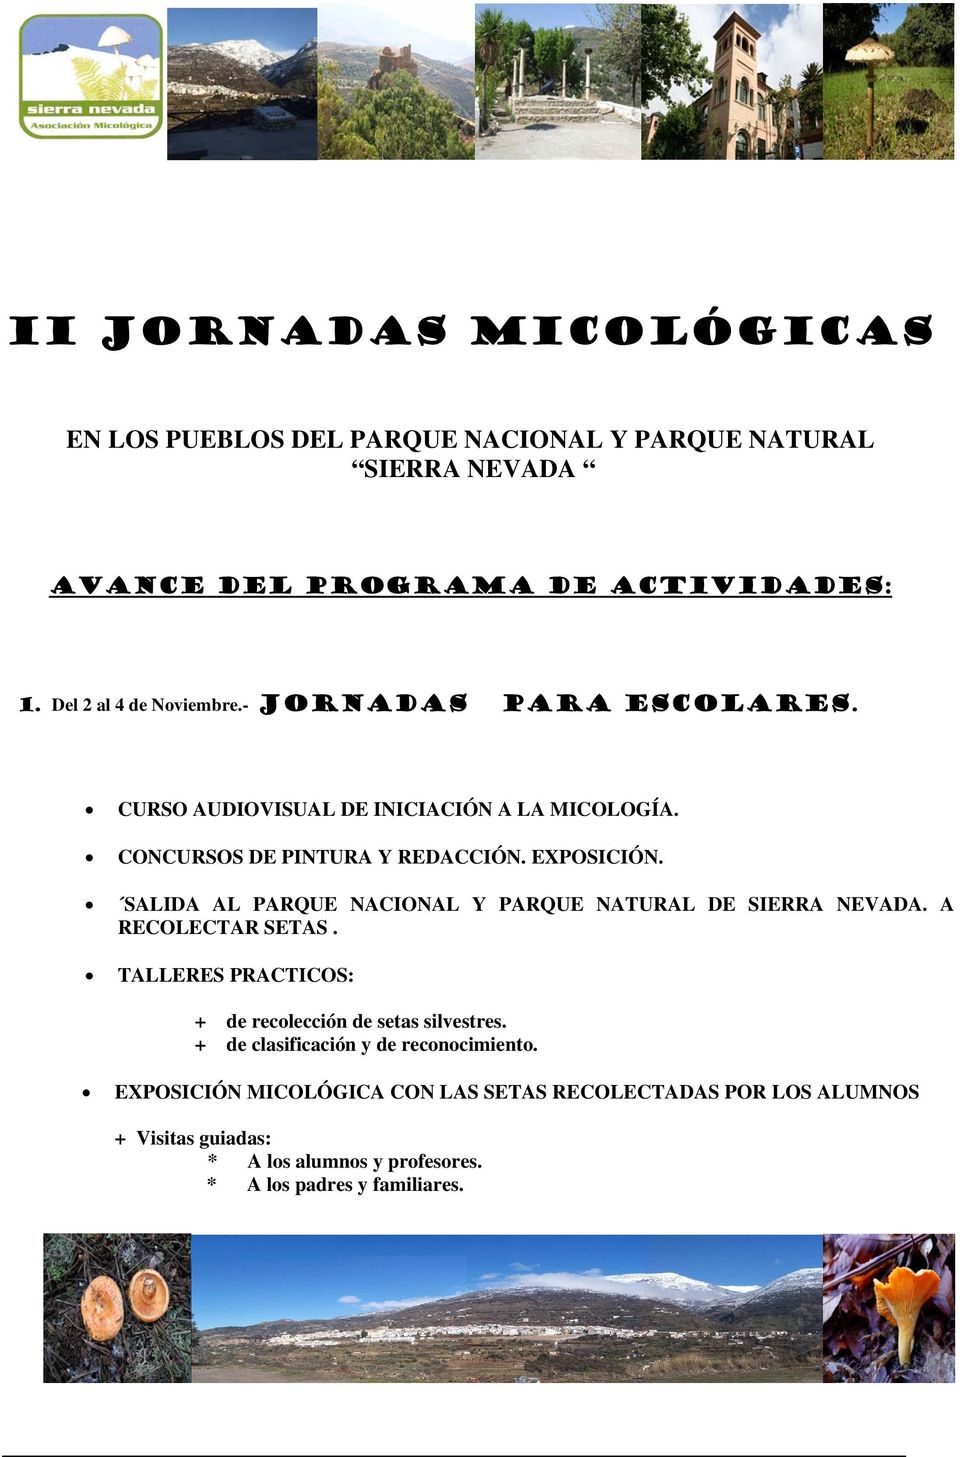 SALIDA AL PARQUE NACIONAL Y PARQUE NATURAL DE SIERRA NEVADA. A RECOLECTAR SETAS. TALLERES PRACTICOS: + de recolección de setas silvestres.